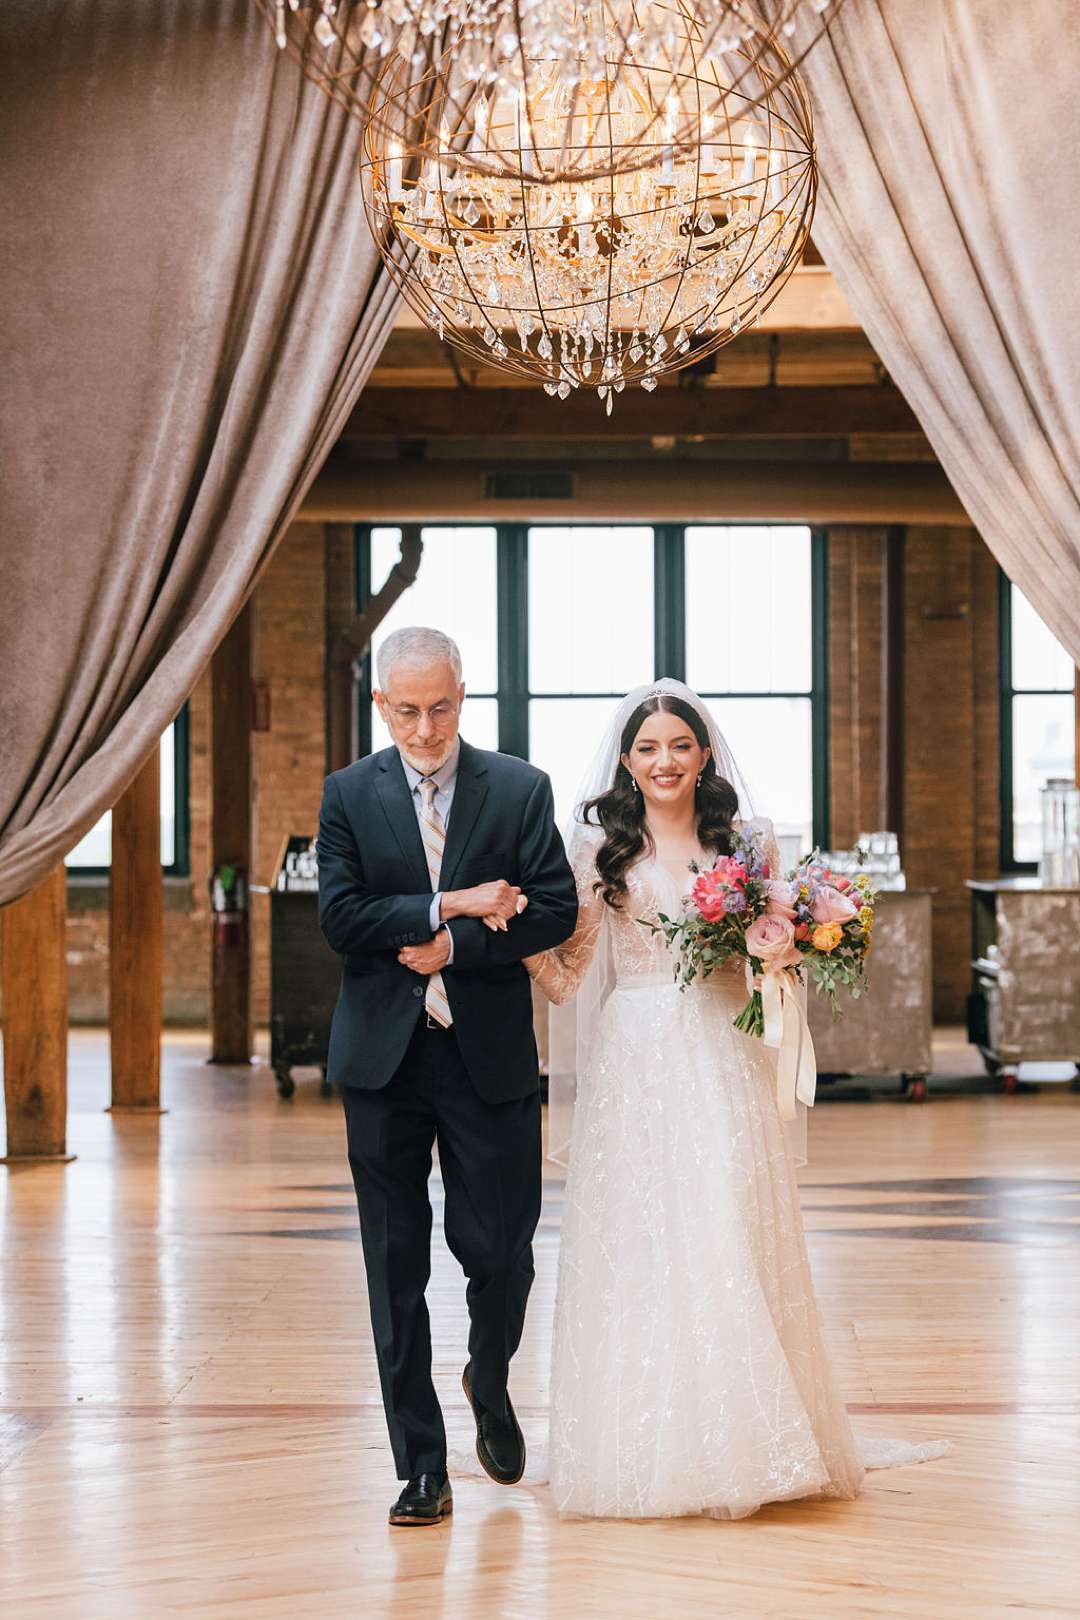 Bride walking in with her father at wedding reception Skyline loft in Bridgeport Arts Center